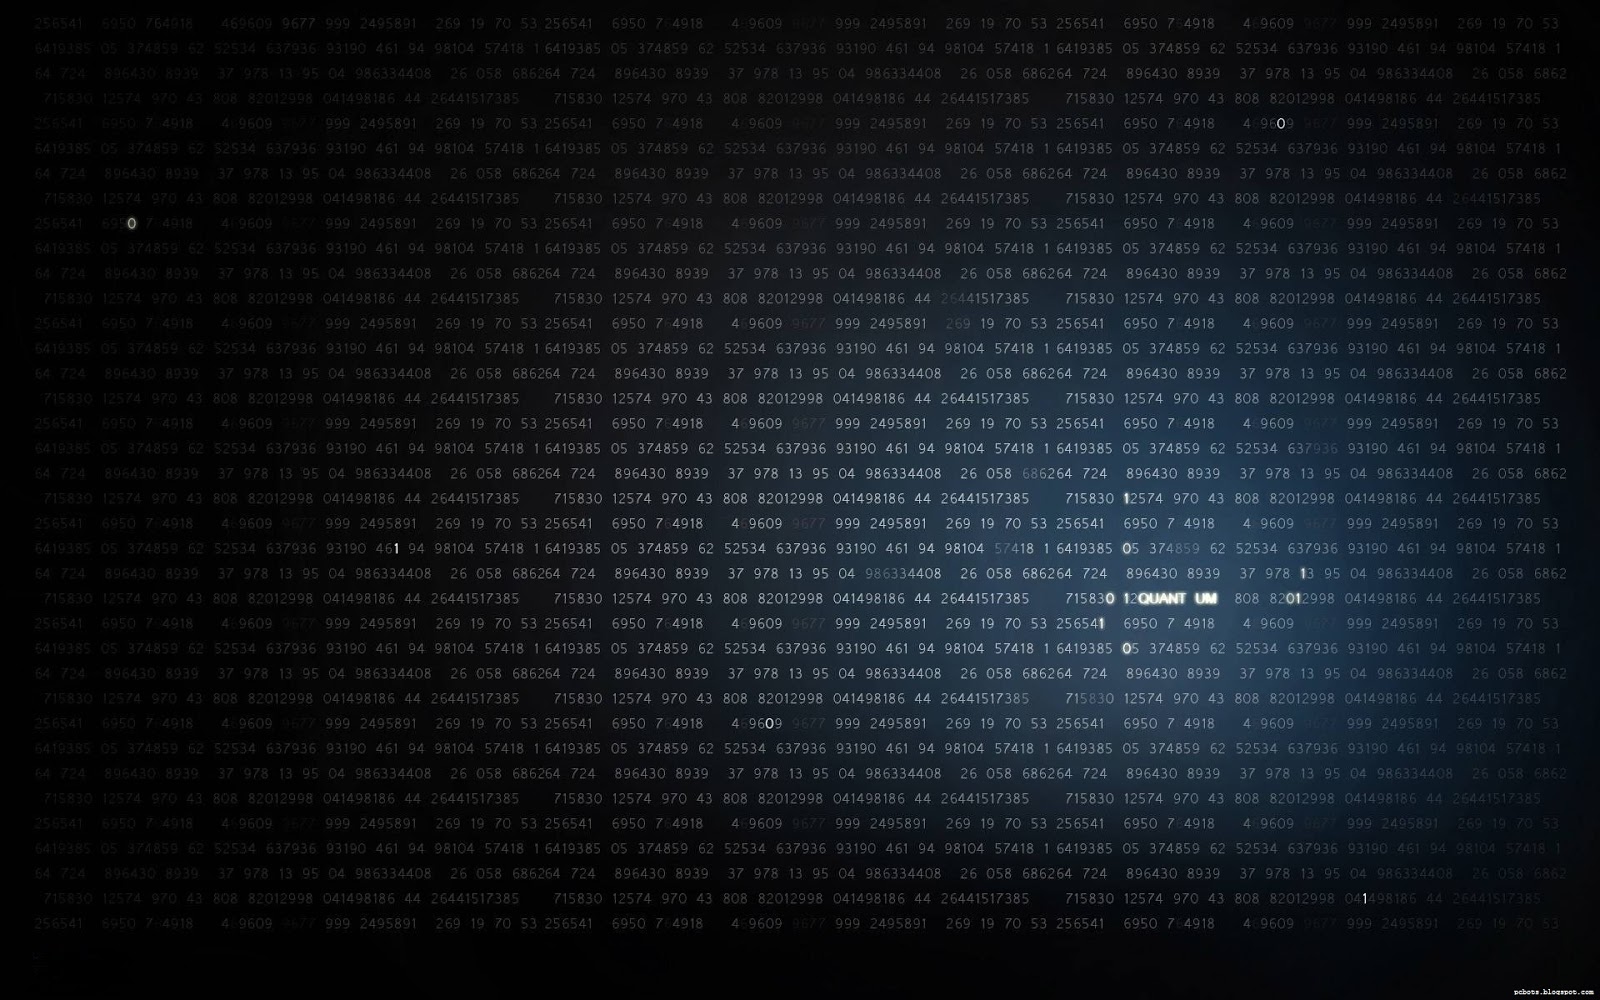 Hackers Wallpaper HD By Pcbots - Part-I ~ PCbots Labs (Blog)